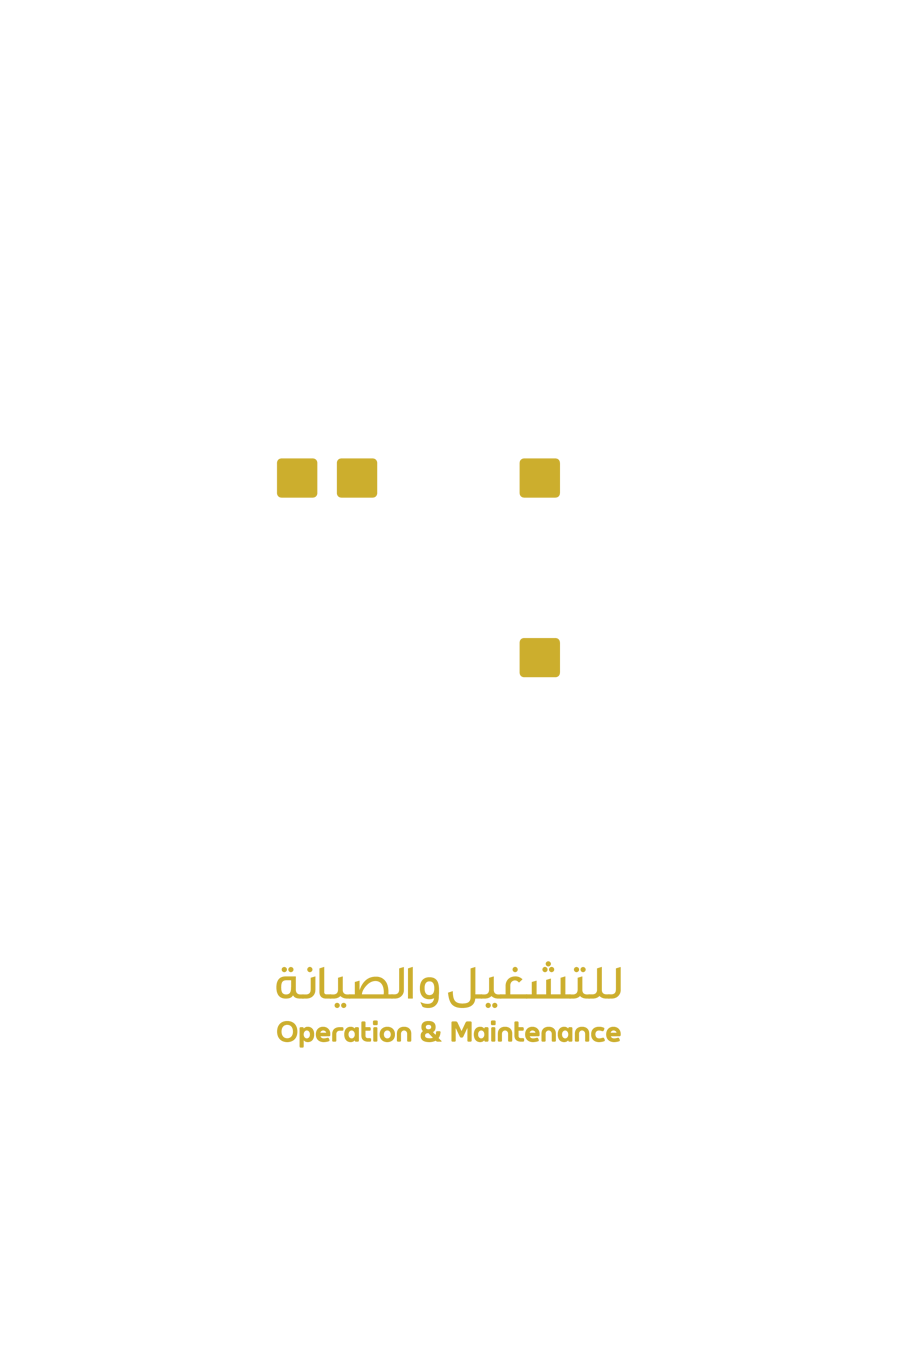 About Us Khafara for Operation and Maintenance